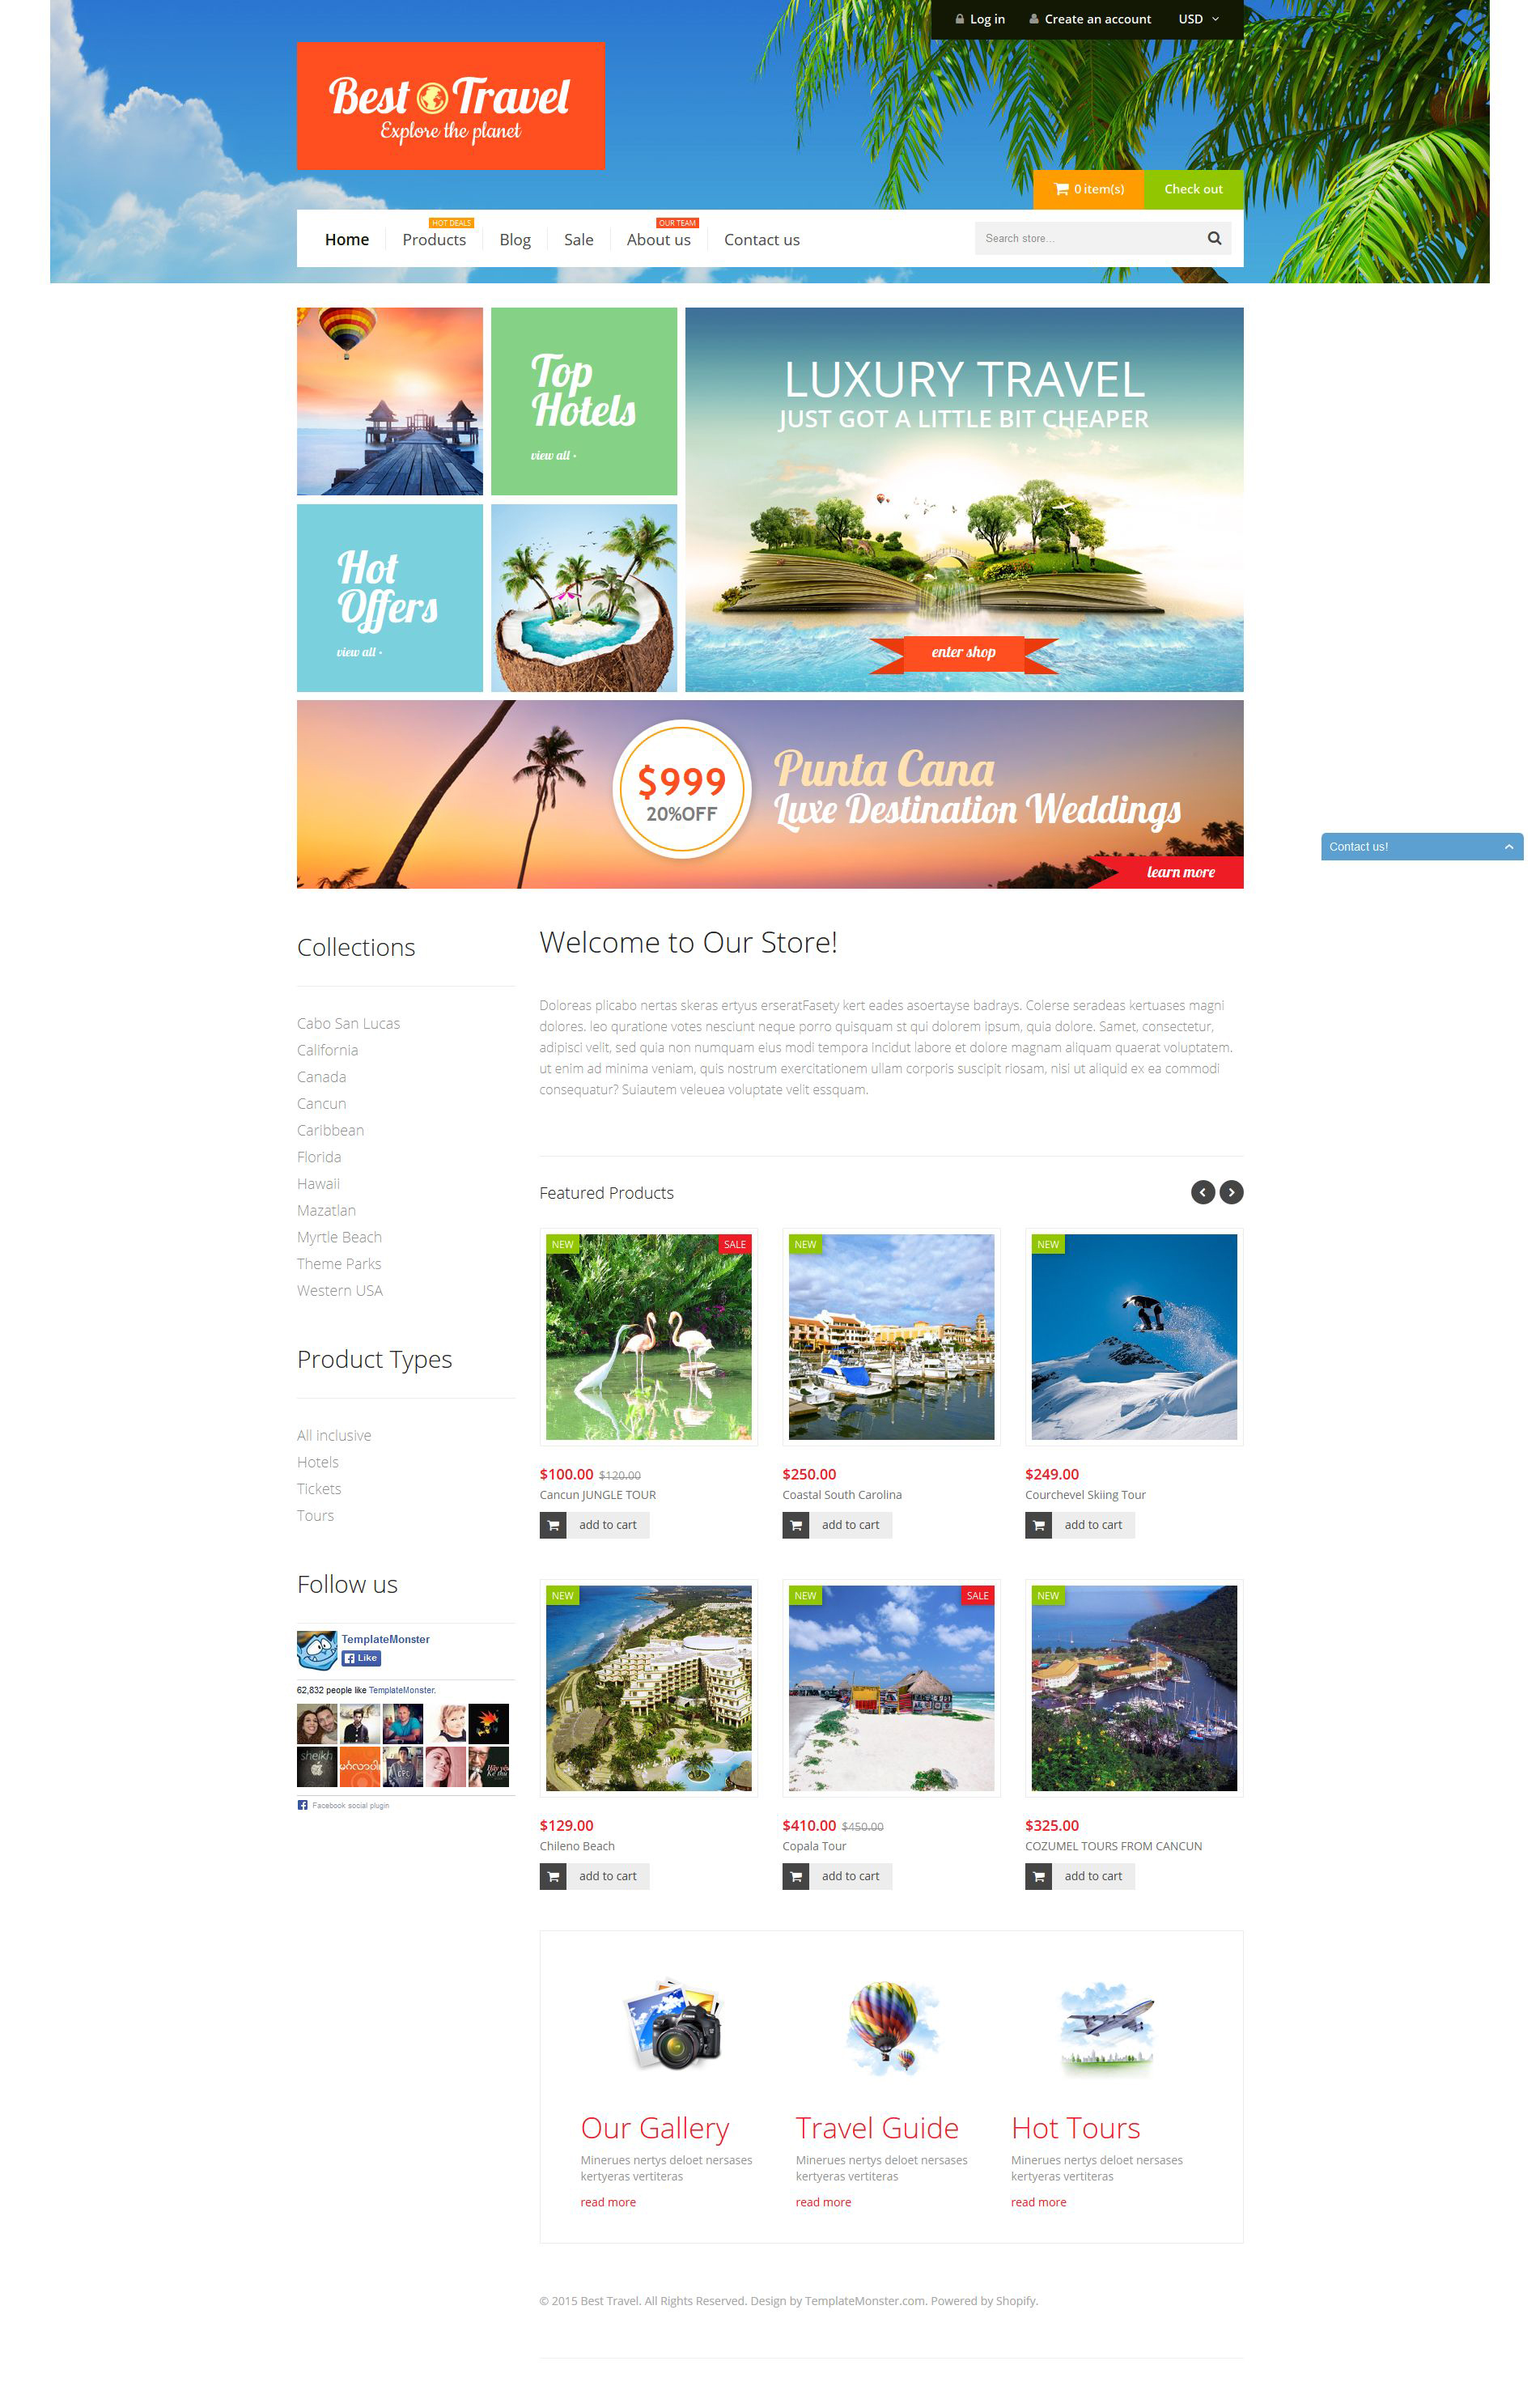 Travel Bureau eCommerce Shopify Online Store 2.0 Theme